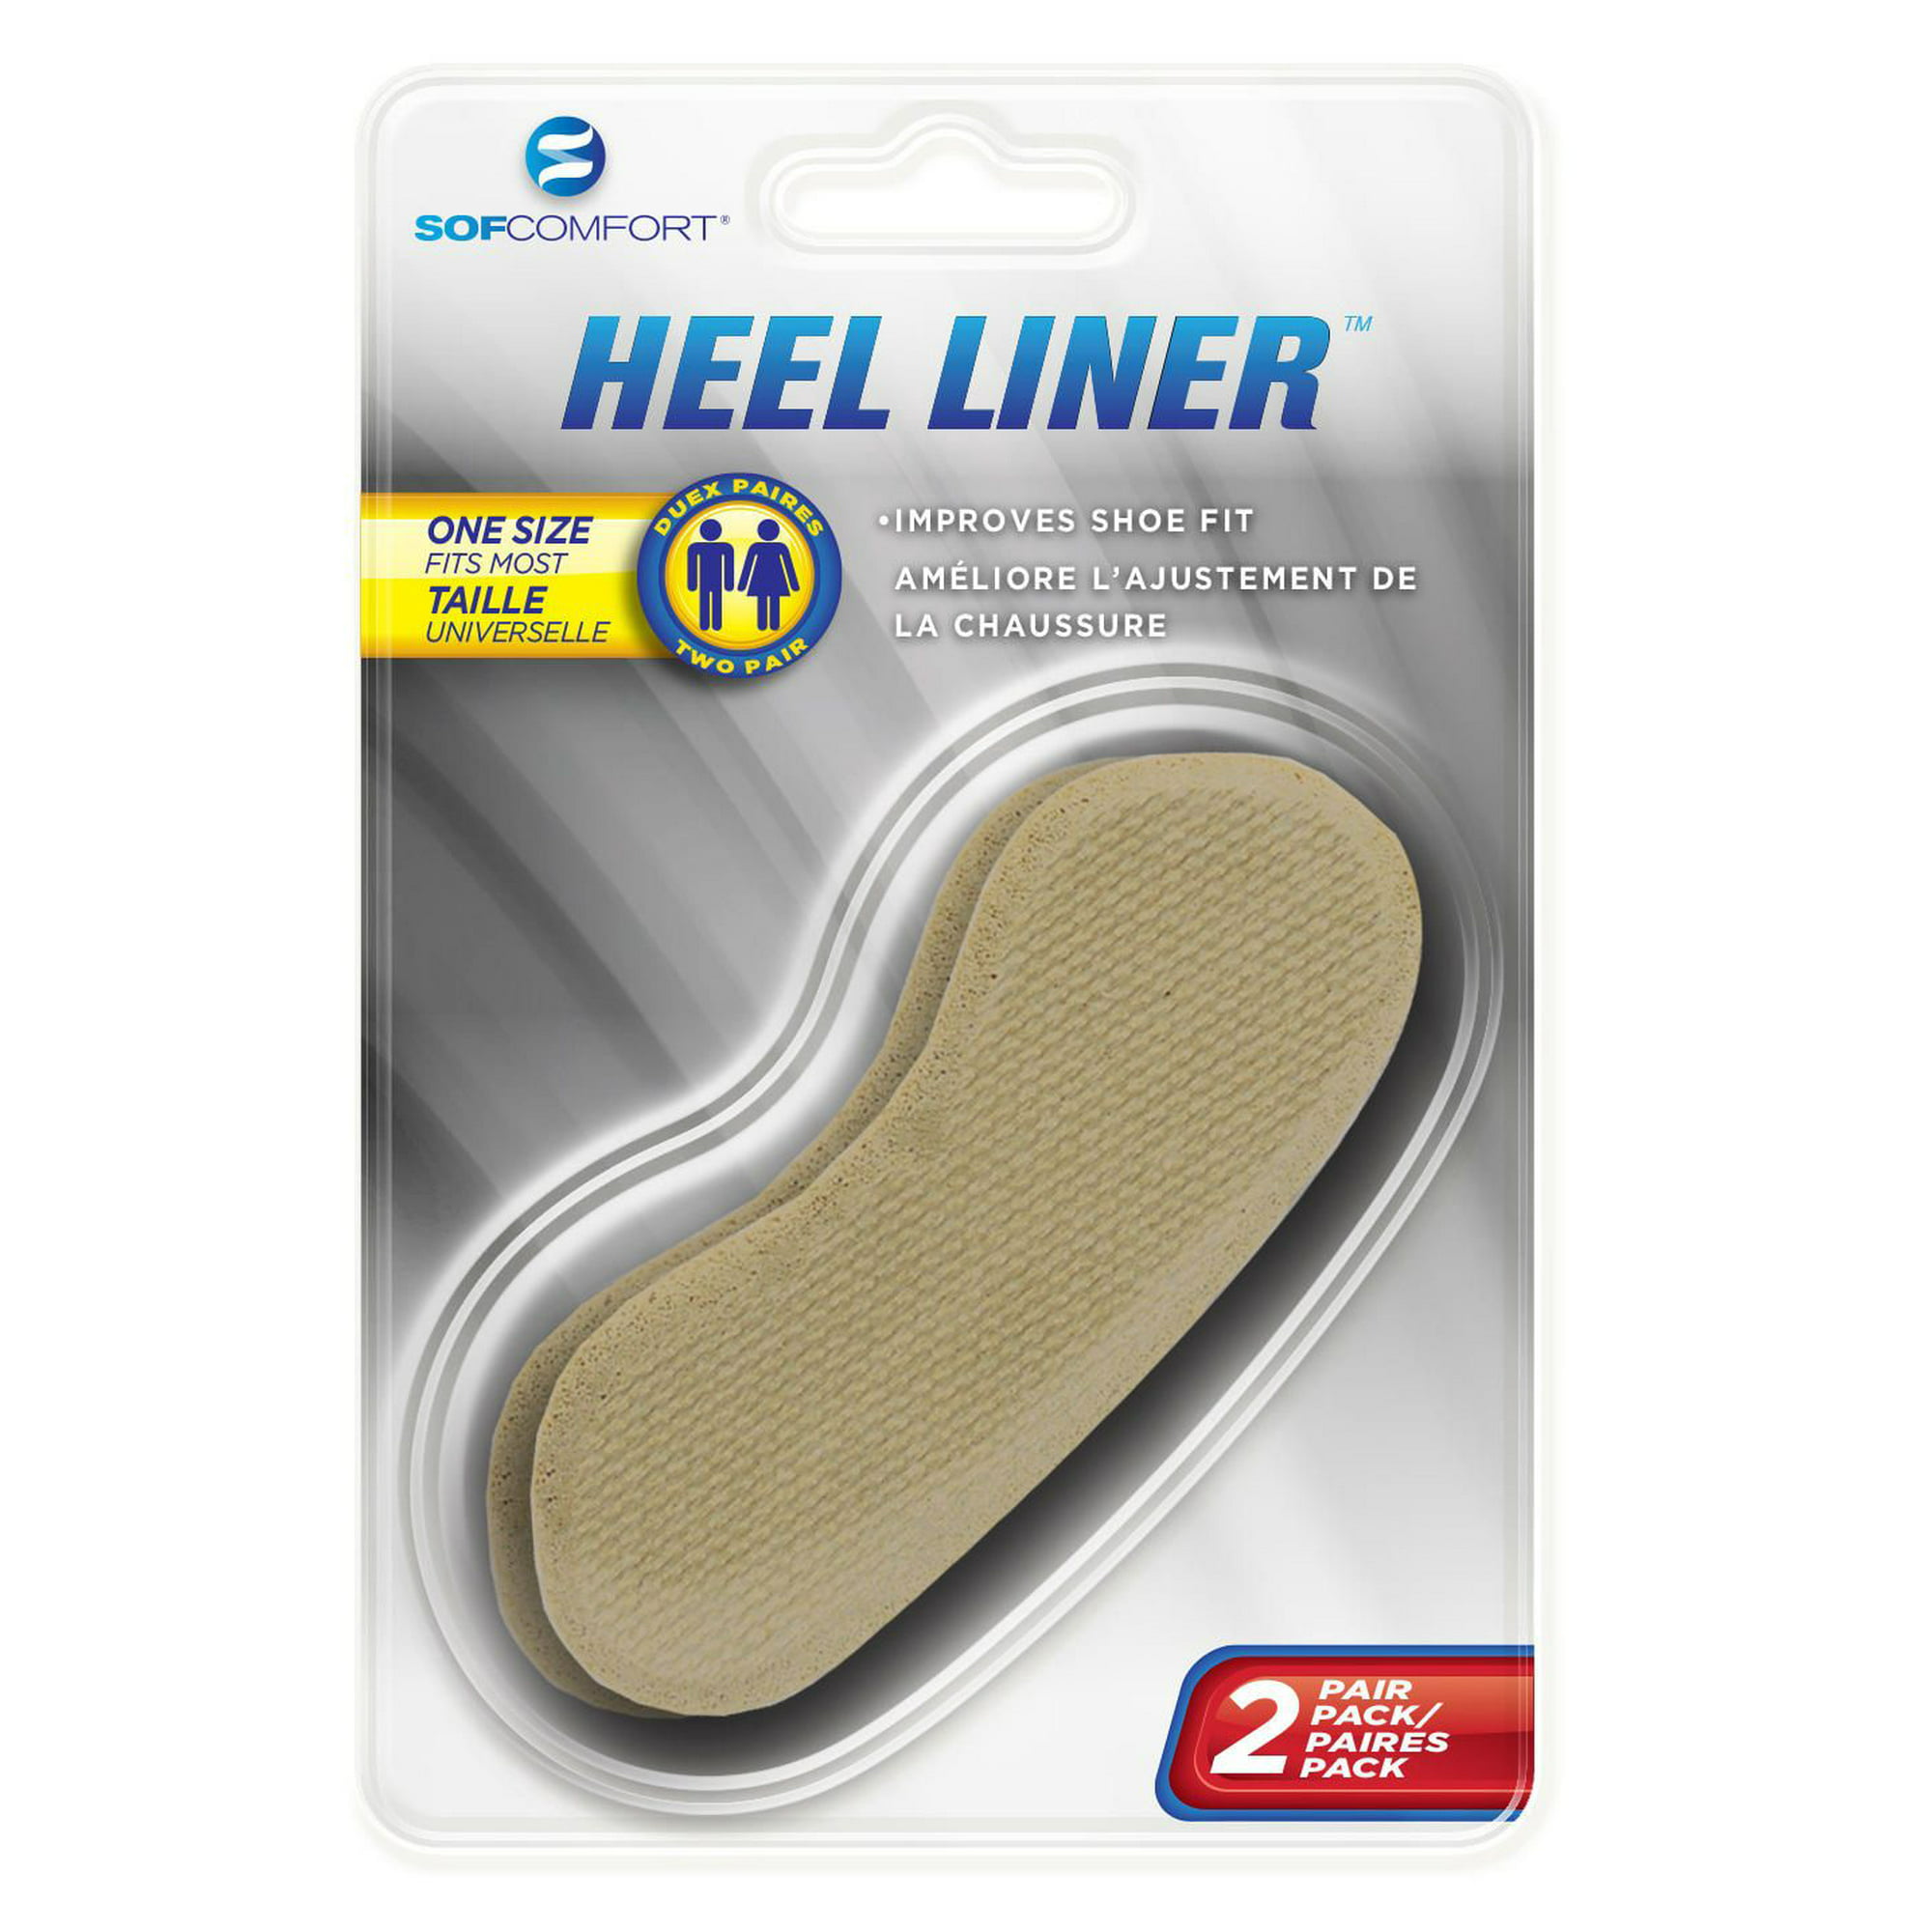 SofComfort Foam Heel Liner - Pack of 2, Improves shoe fit 